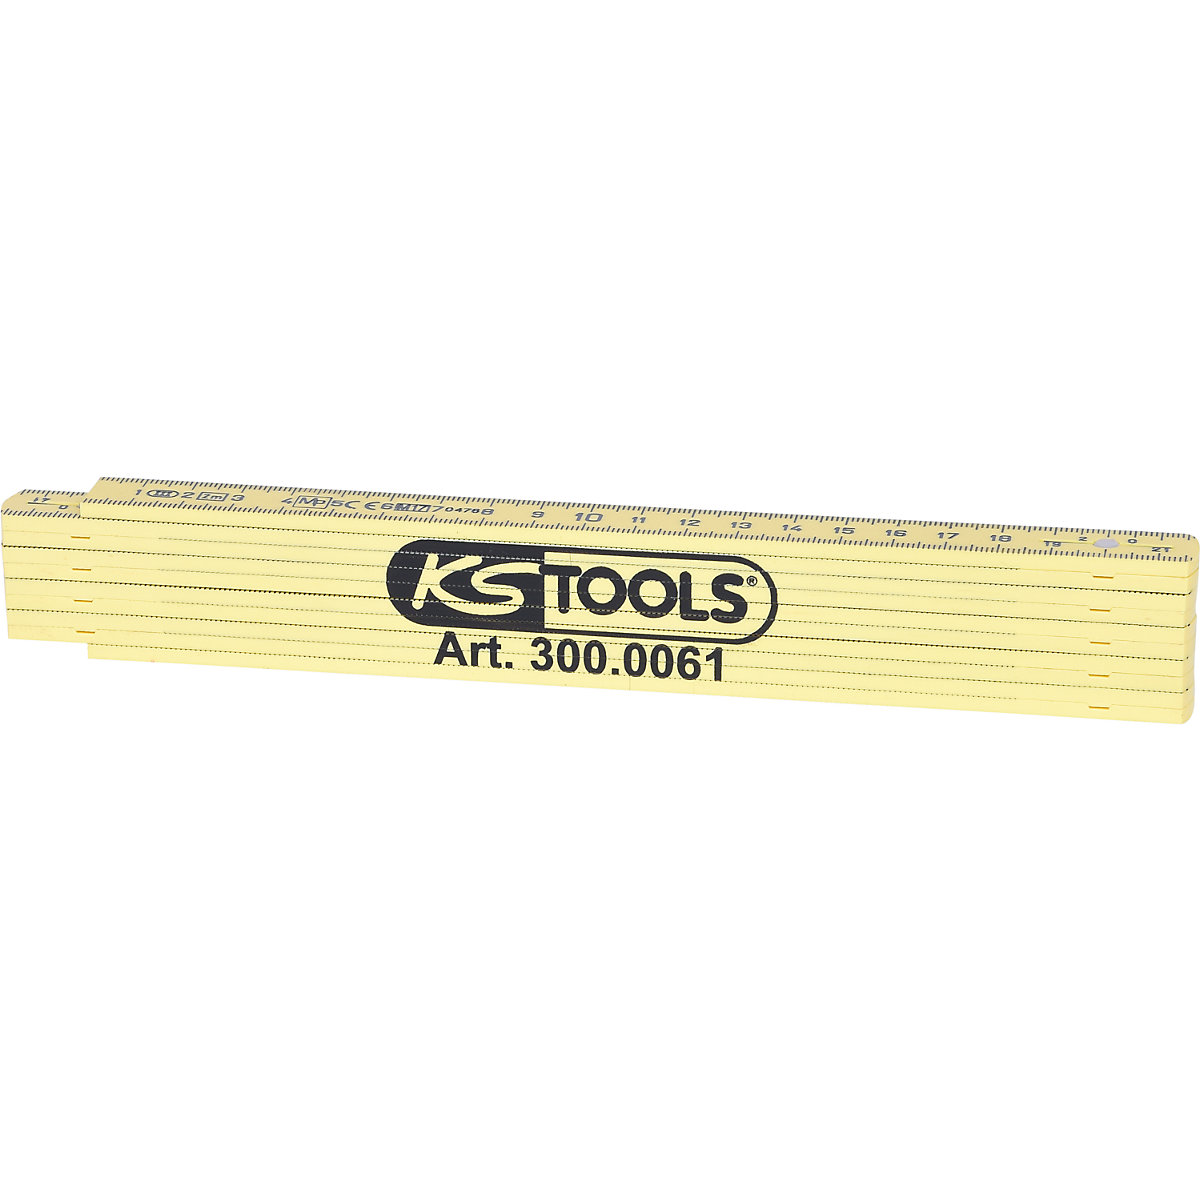 Plastic folding ruler - KS Tools